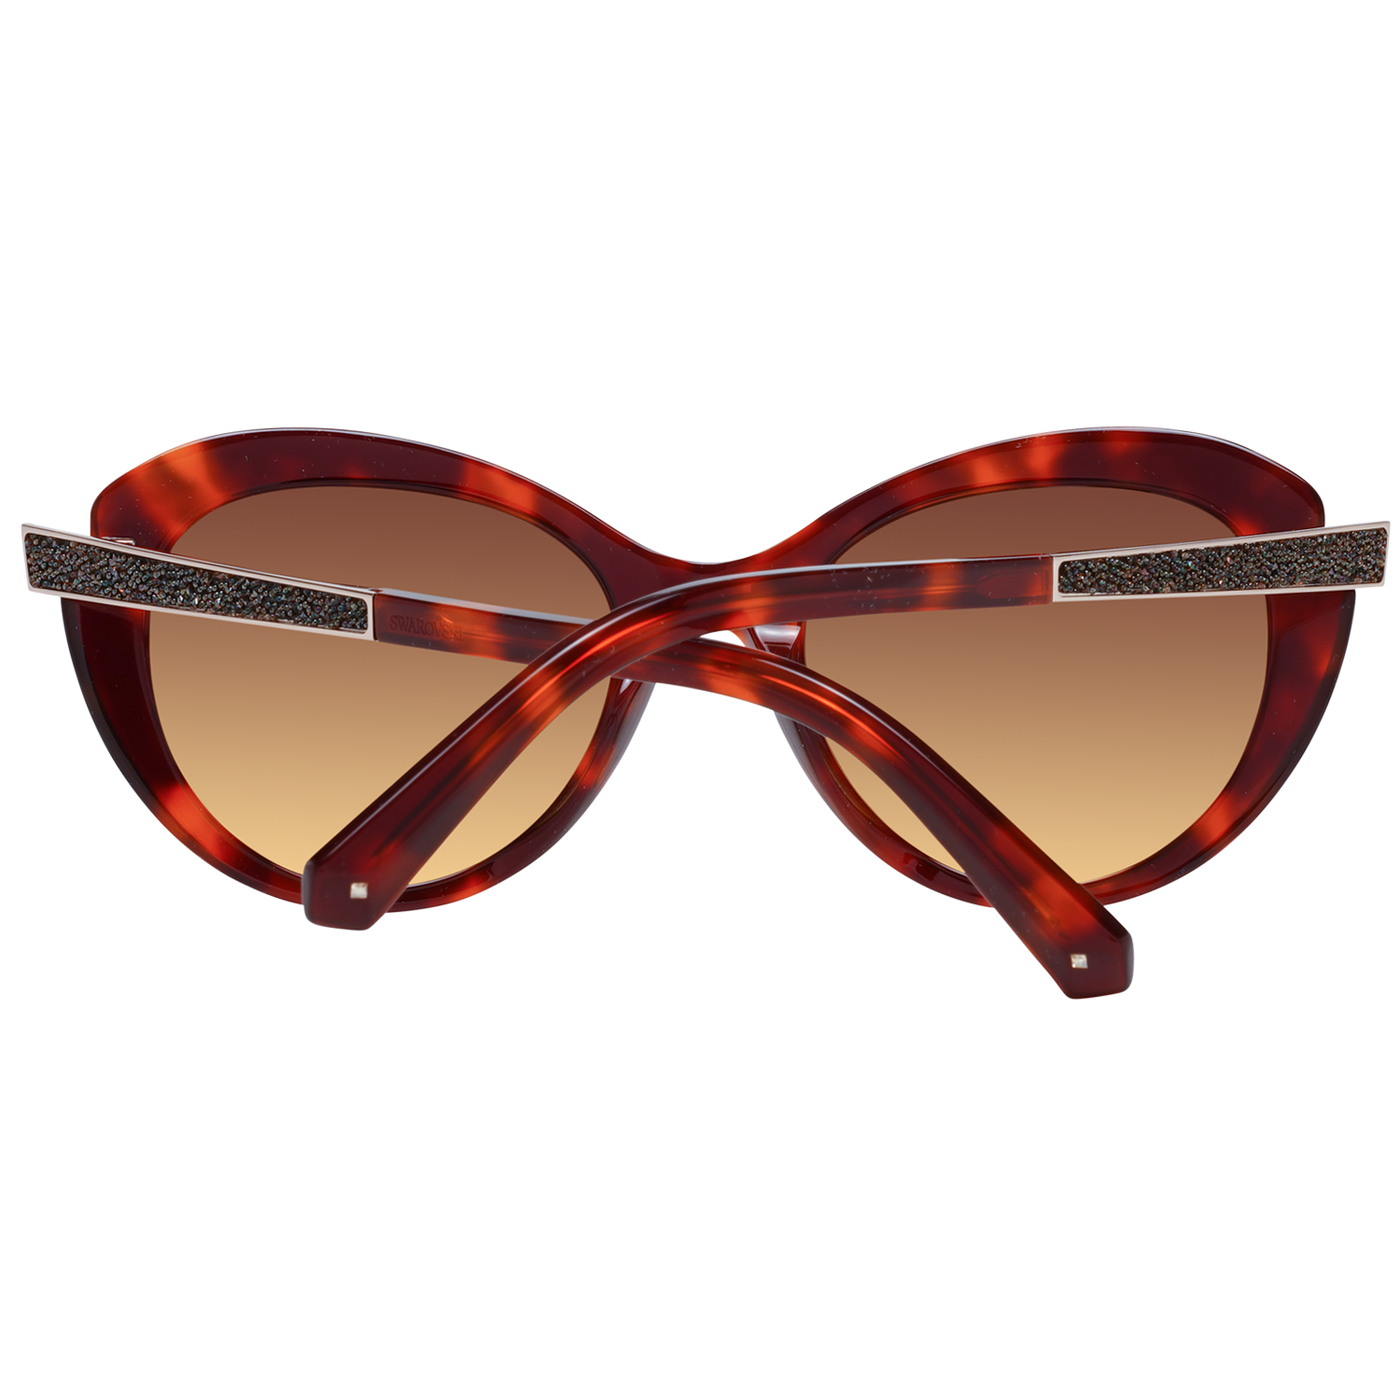 Swarovski Brown Women Sunglasses